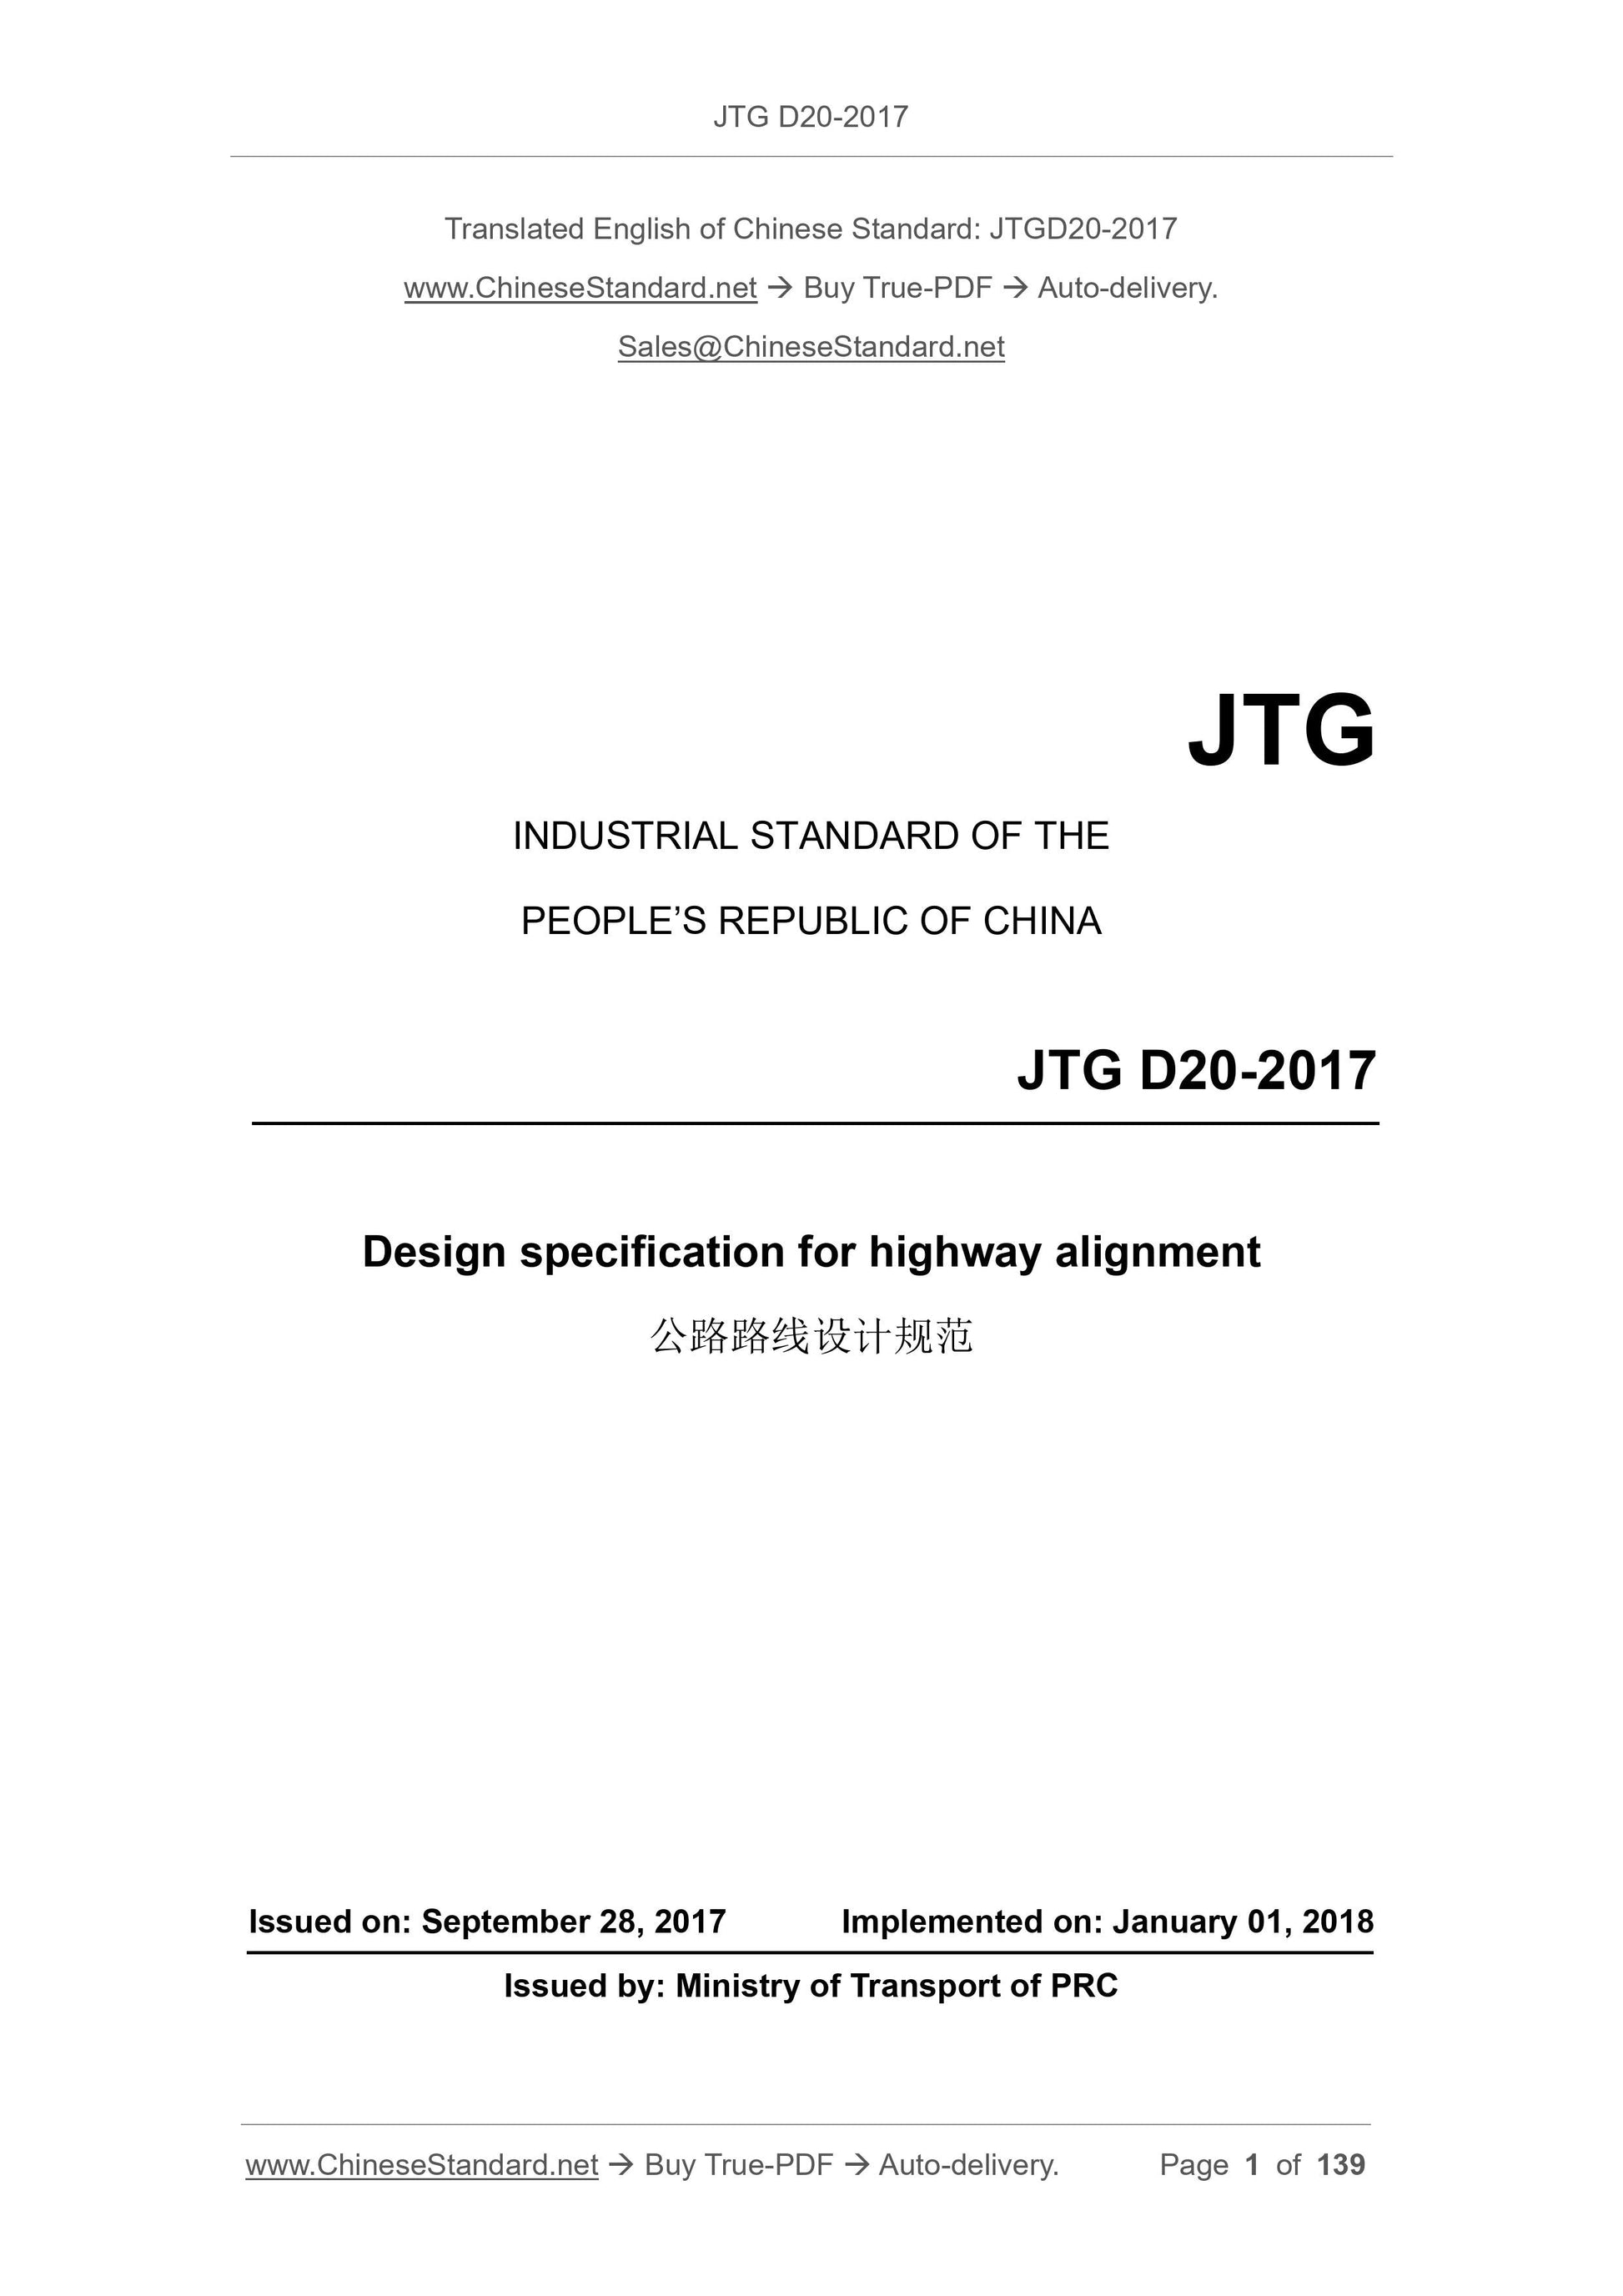 JTG D20-2017 Page 1